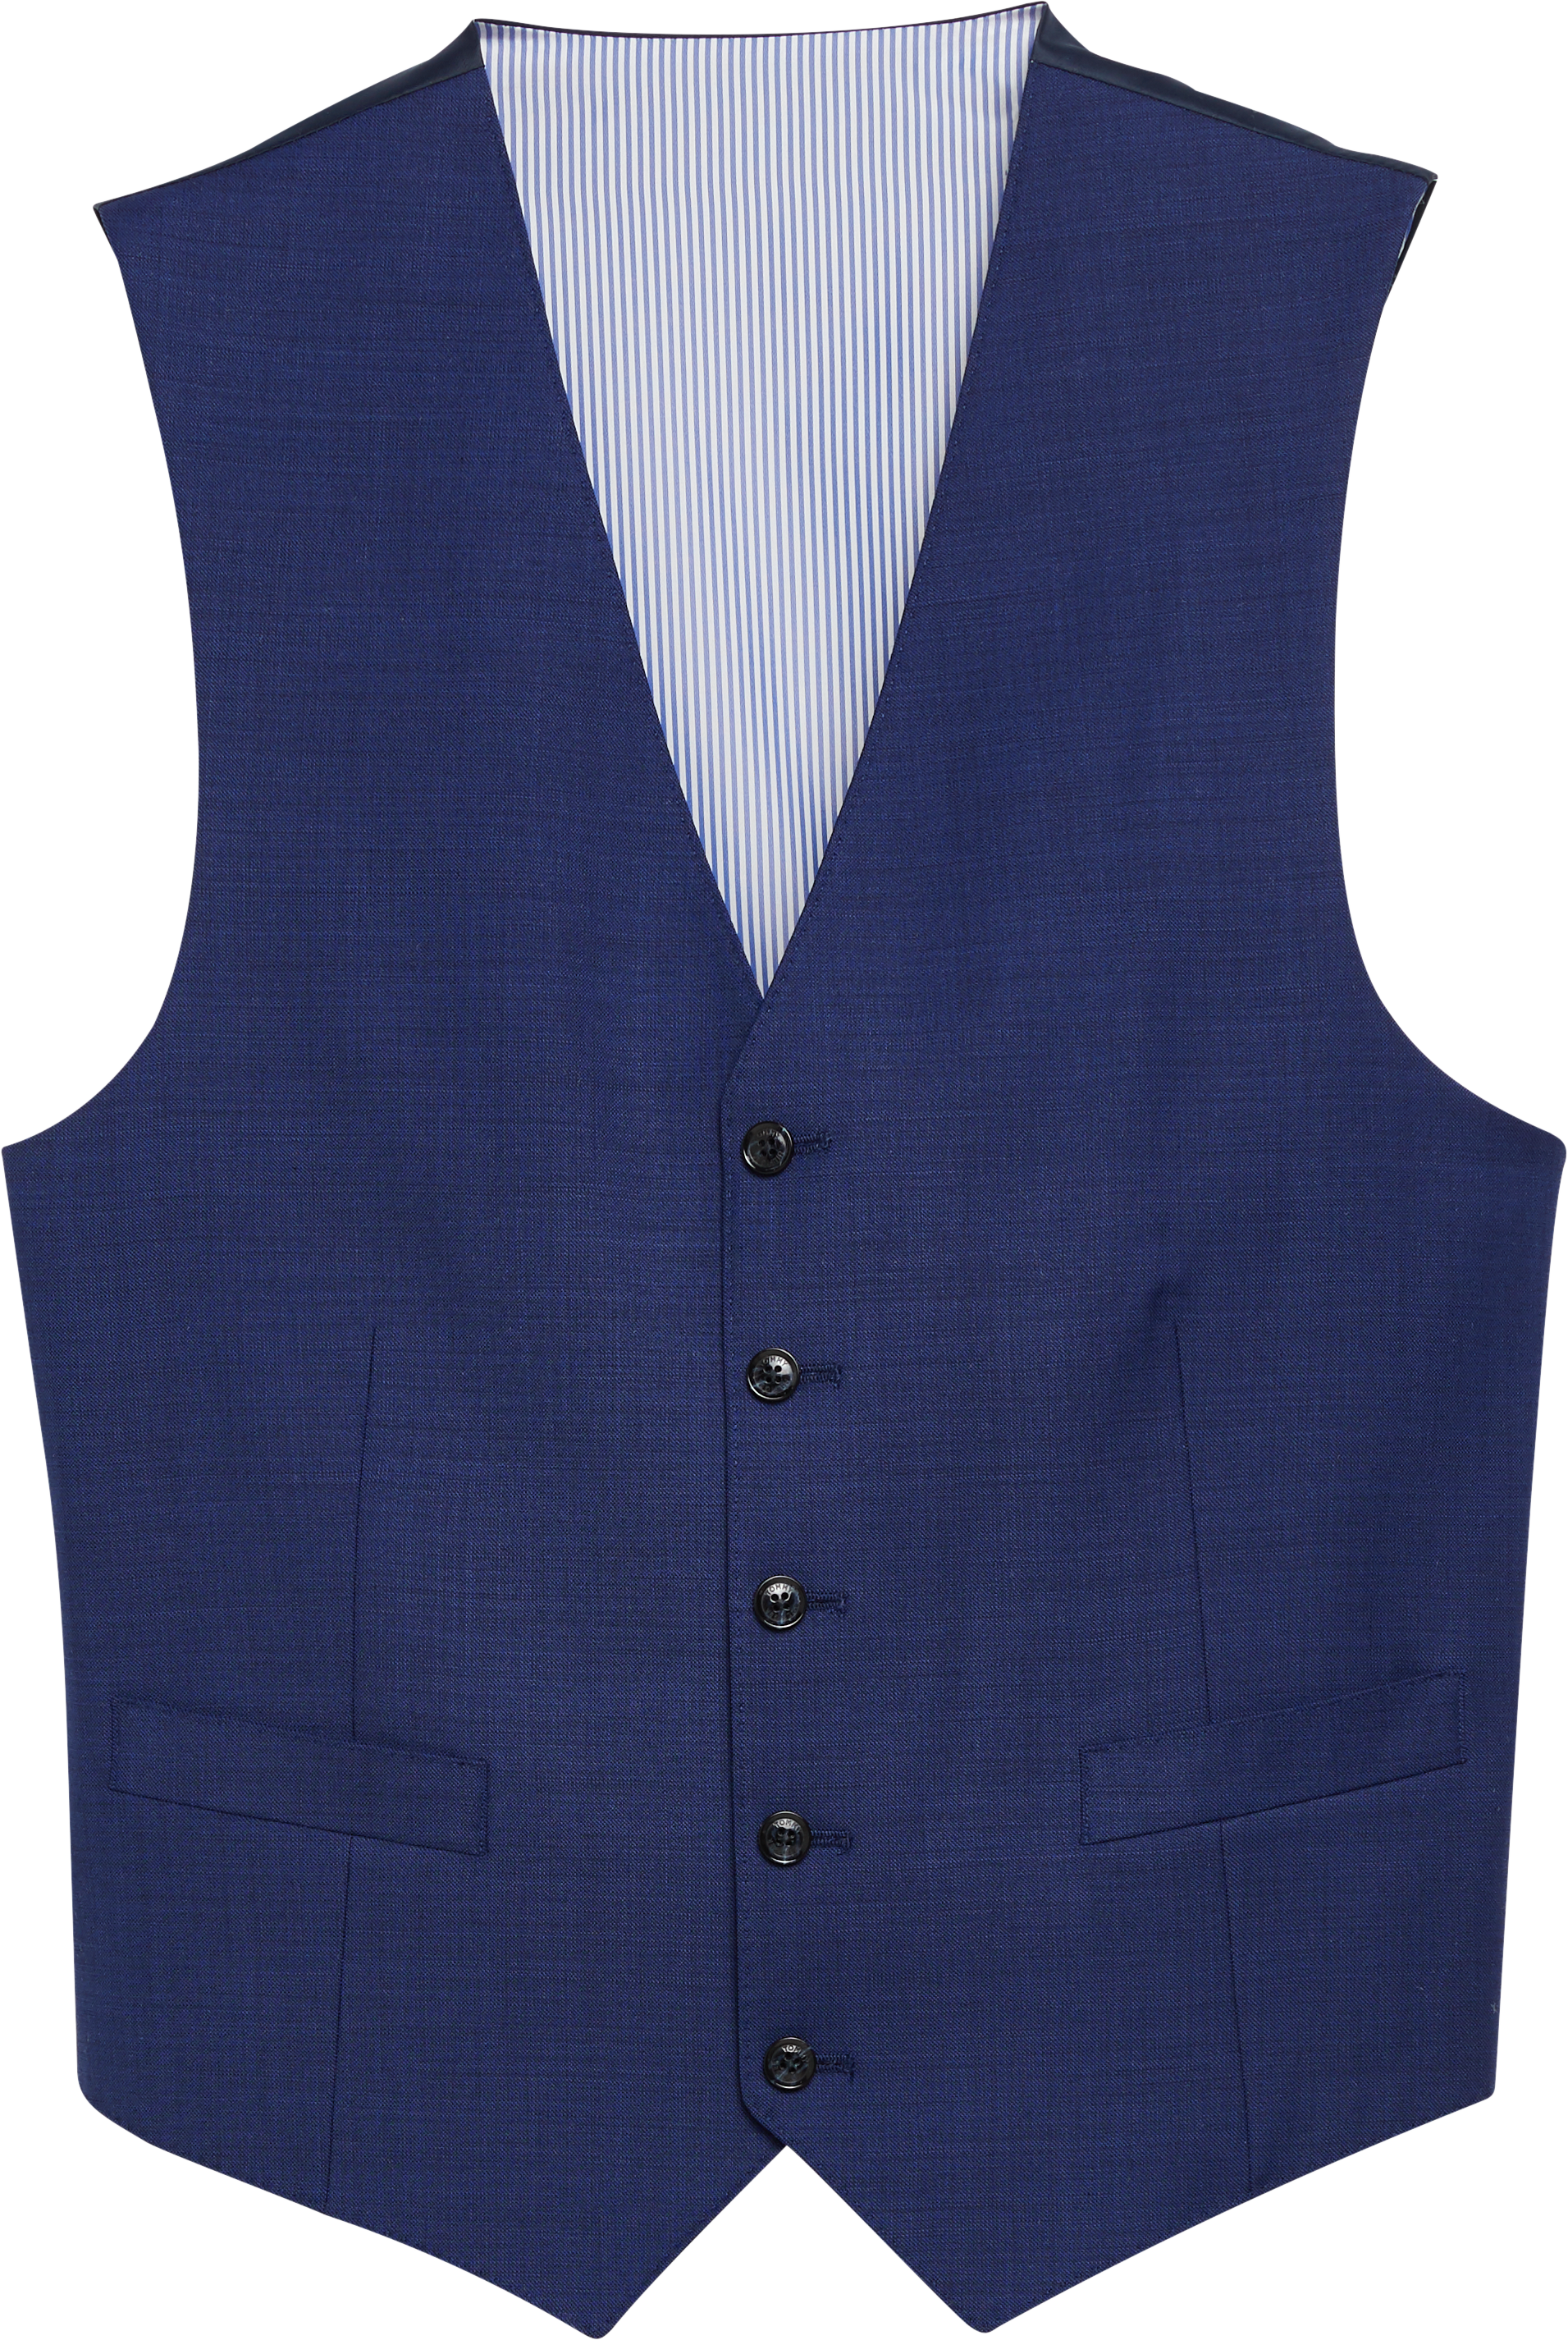 Tommy Hilfiger Modern Fit Suit Separates Vest, Postman Blue - Men's ...